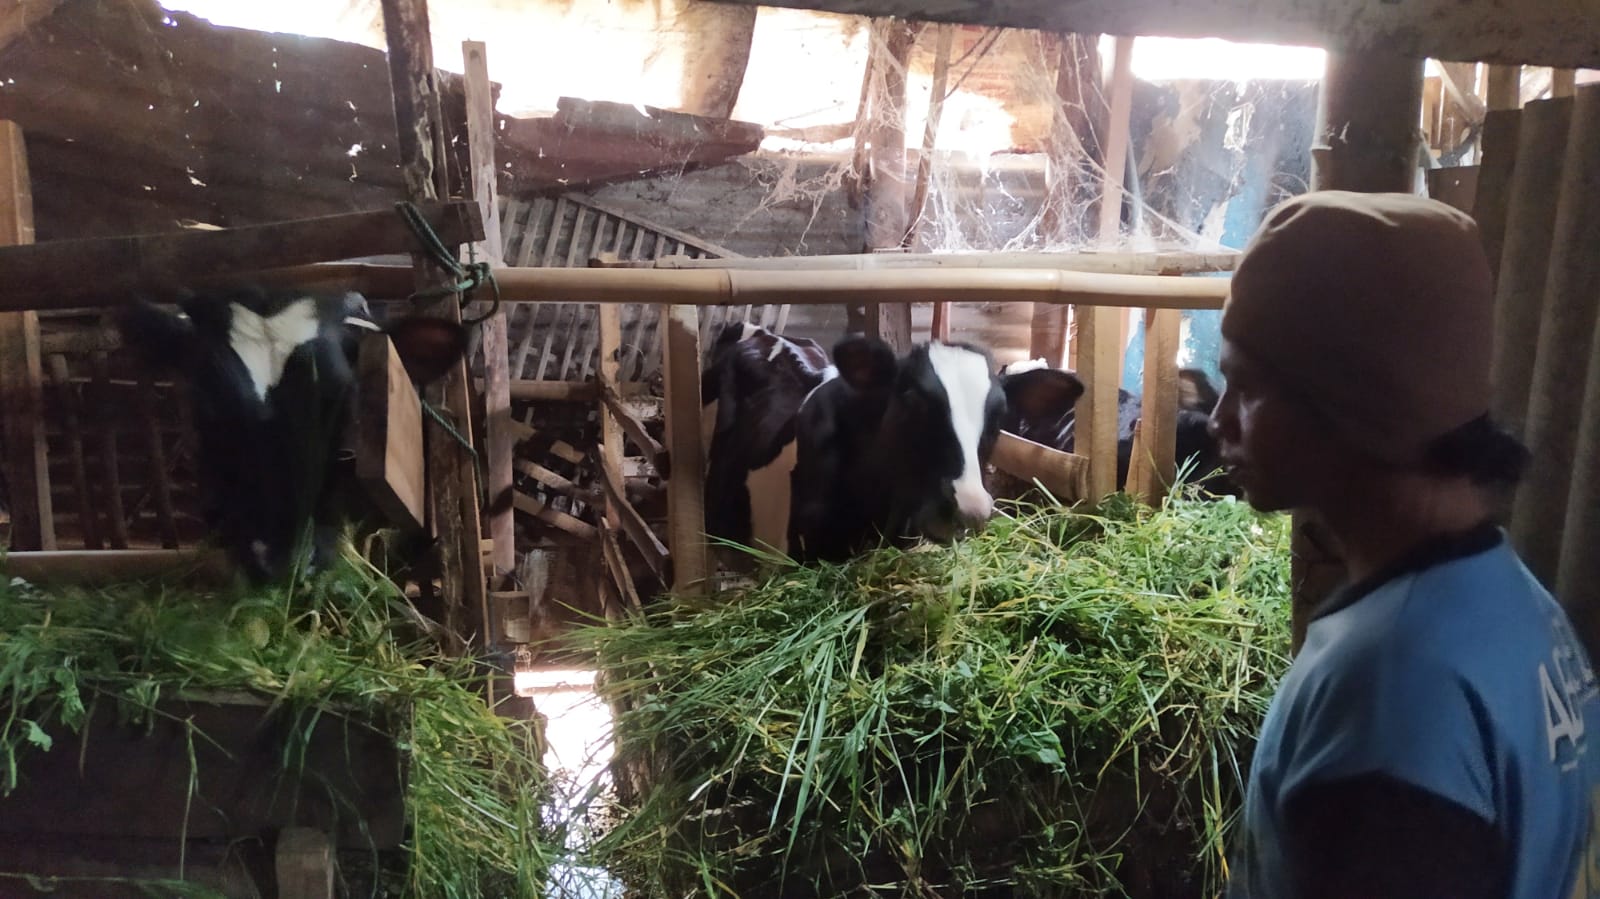 Rudik bersama hewan ternak yang setiap hari ia rawat di dalam gubuk rumahnya. Foto: Azmy